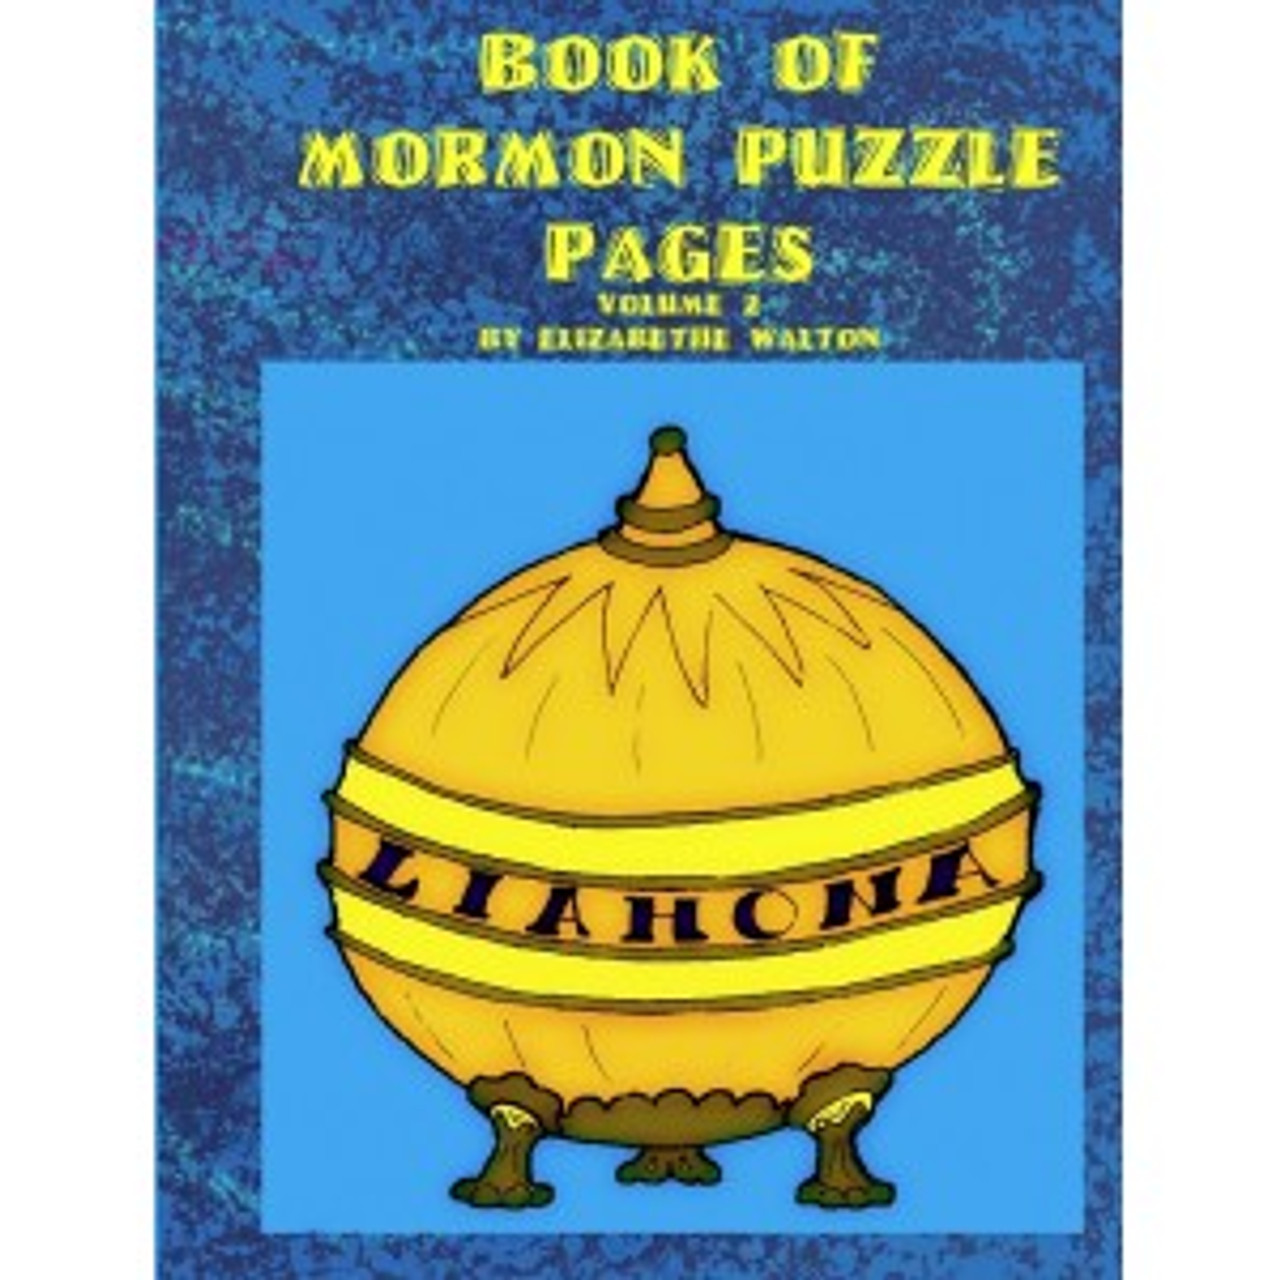 Book of Mormon Puzzle Pages Vol 2 *